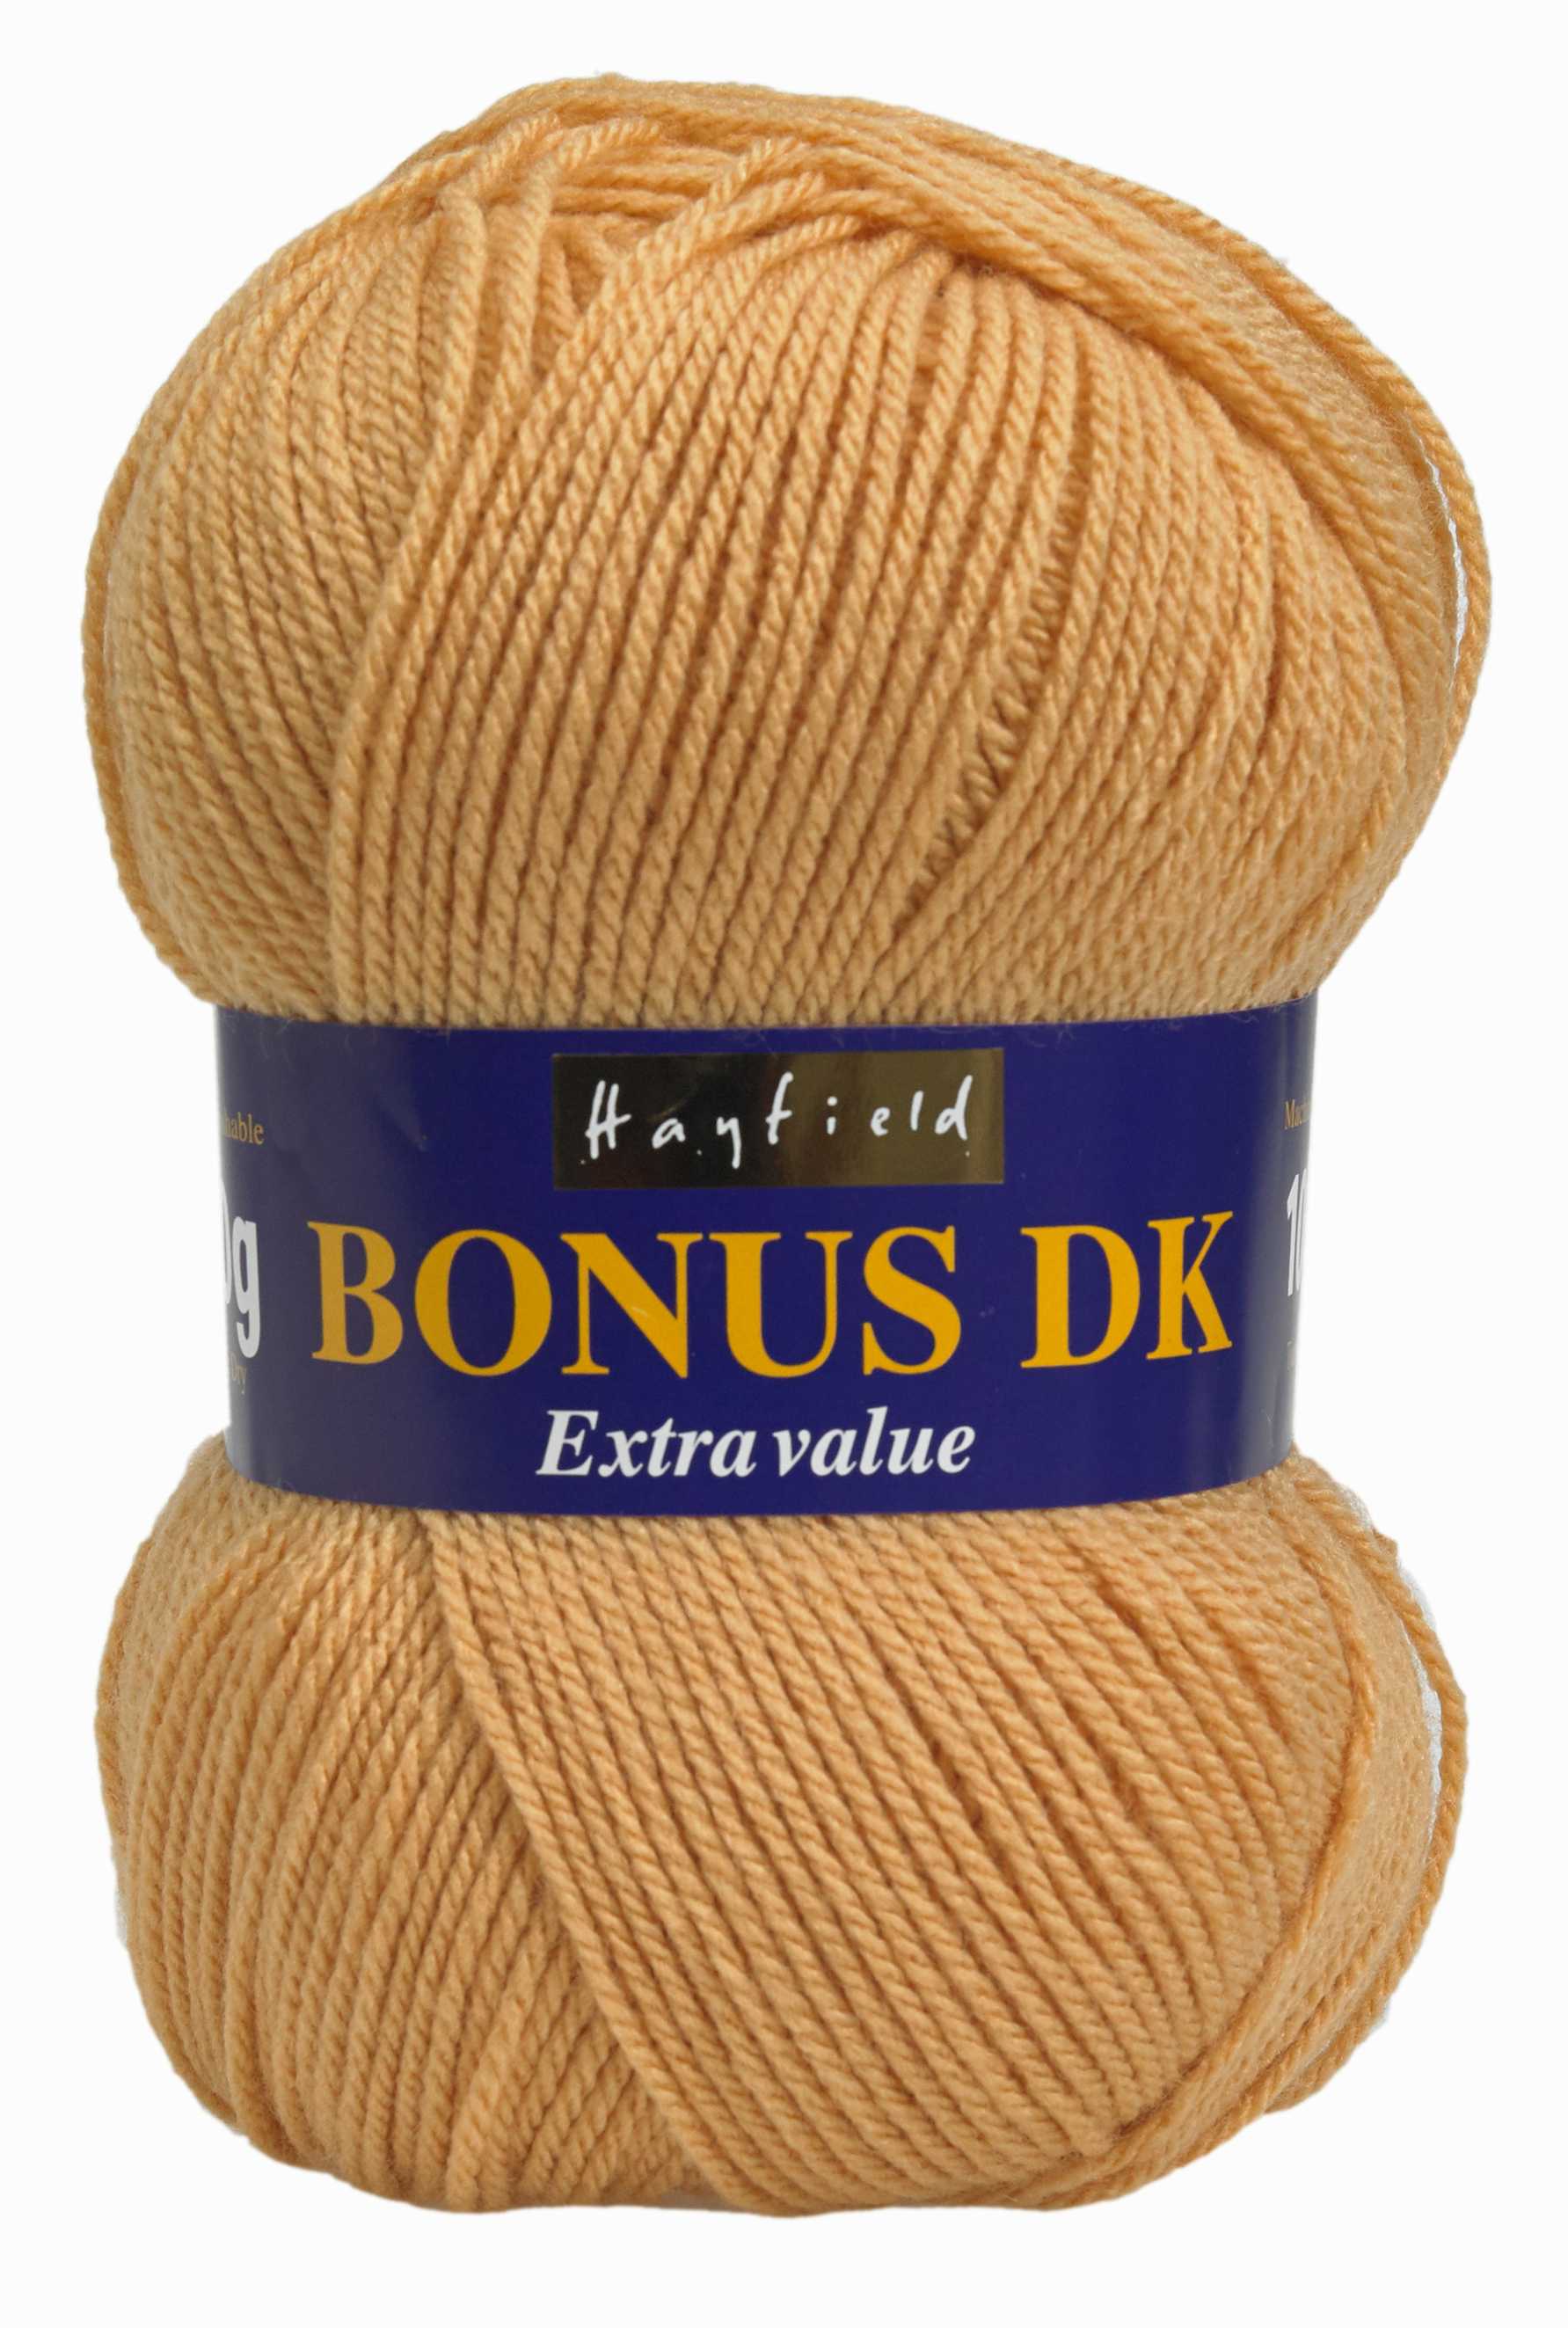 Hayfield Bonus DK 579 Blonde 100g